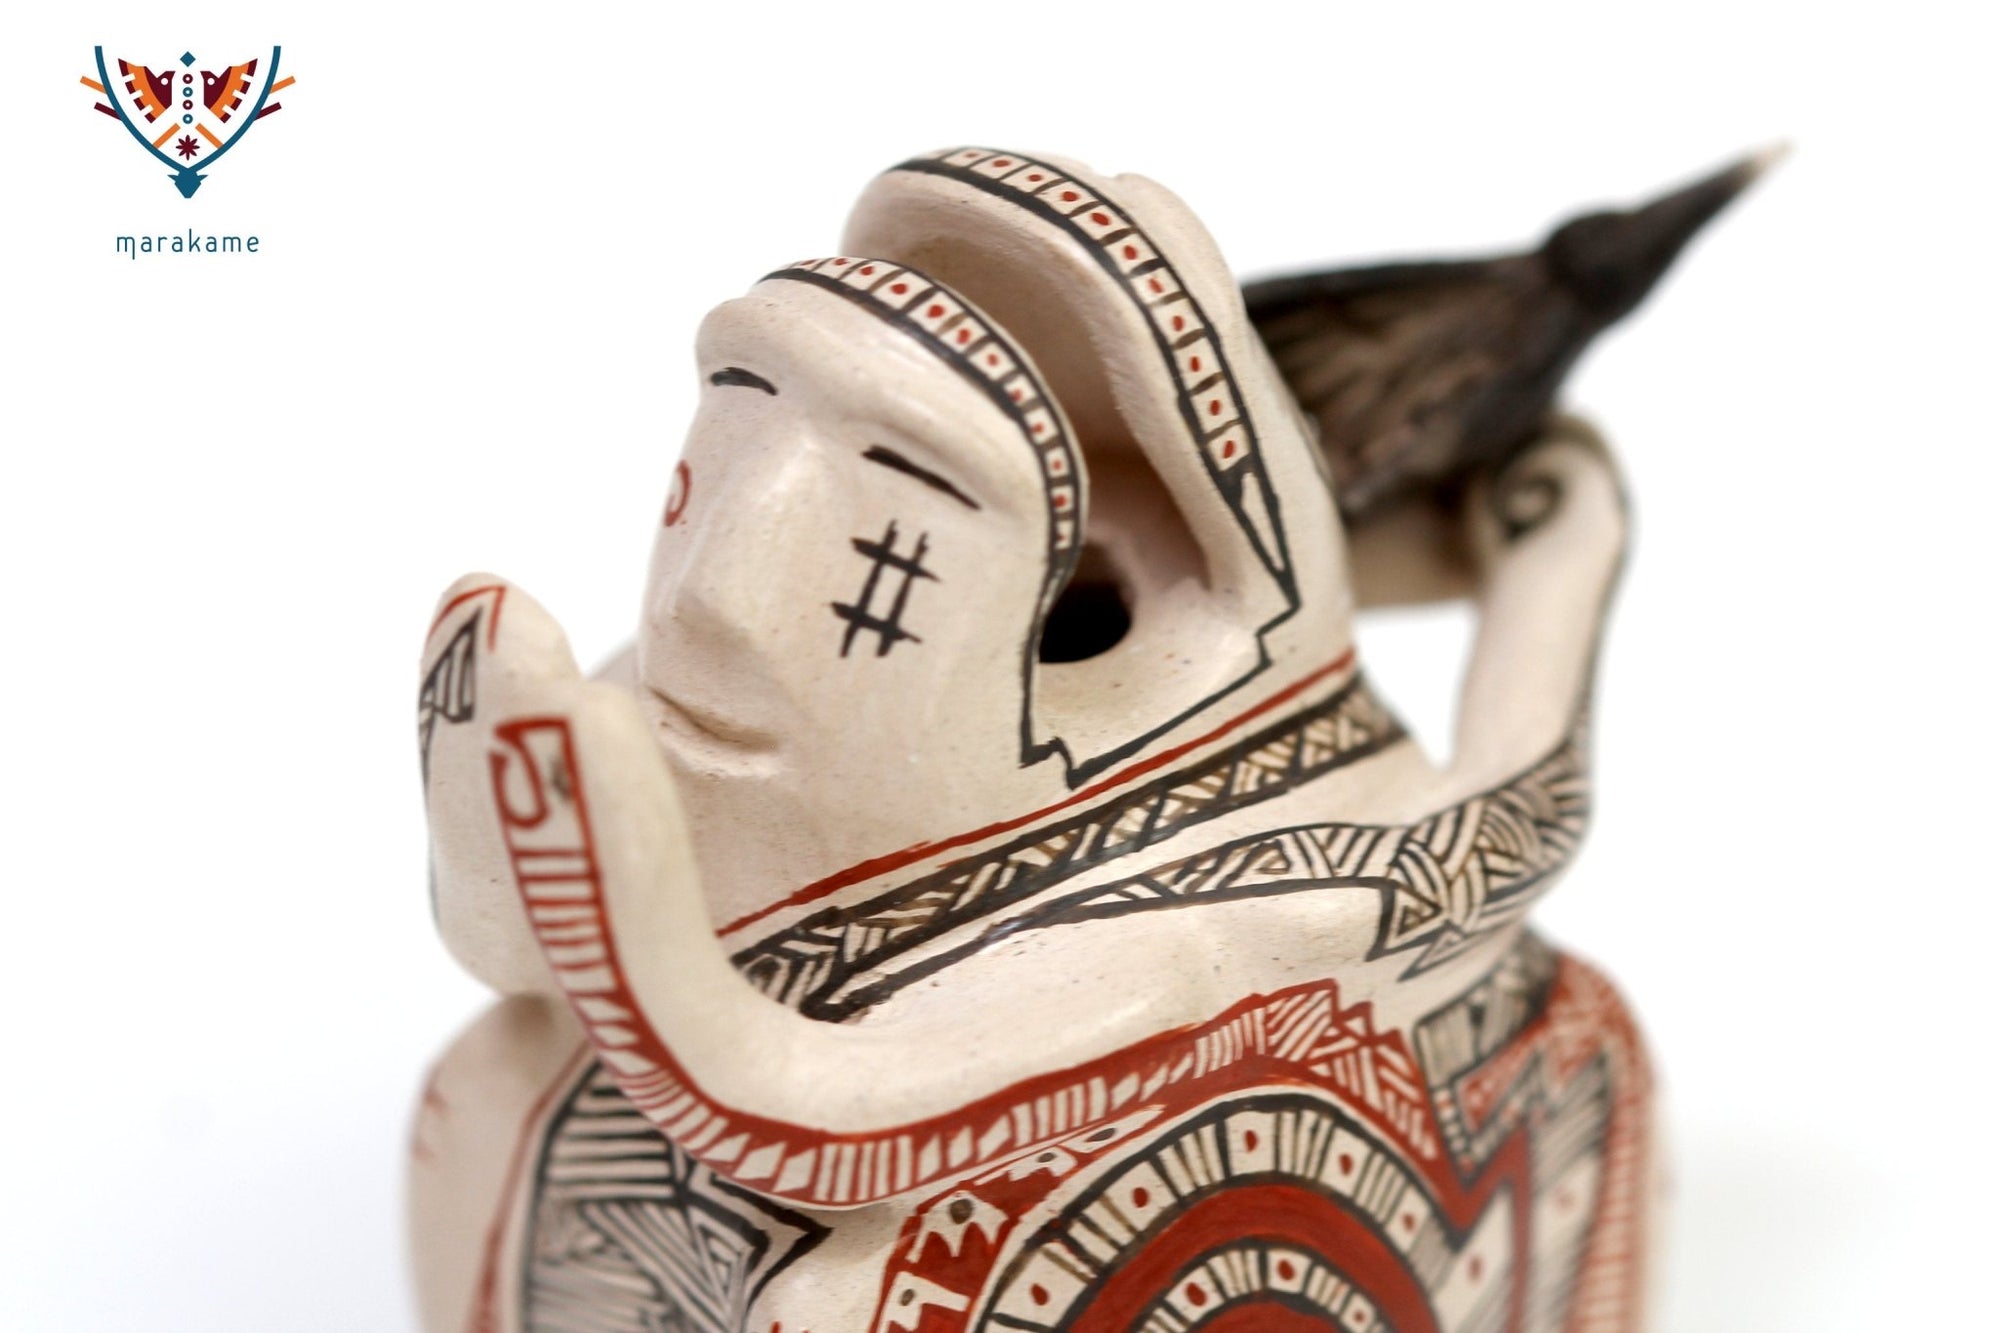 Mata Ortiz Ceramics - Paquimé Shaman - Huichol Art - Marakame